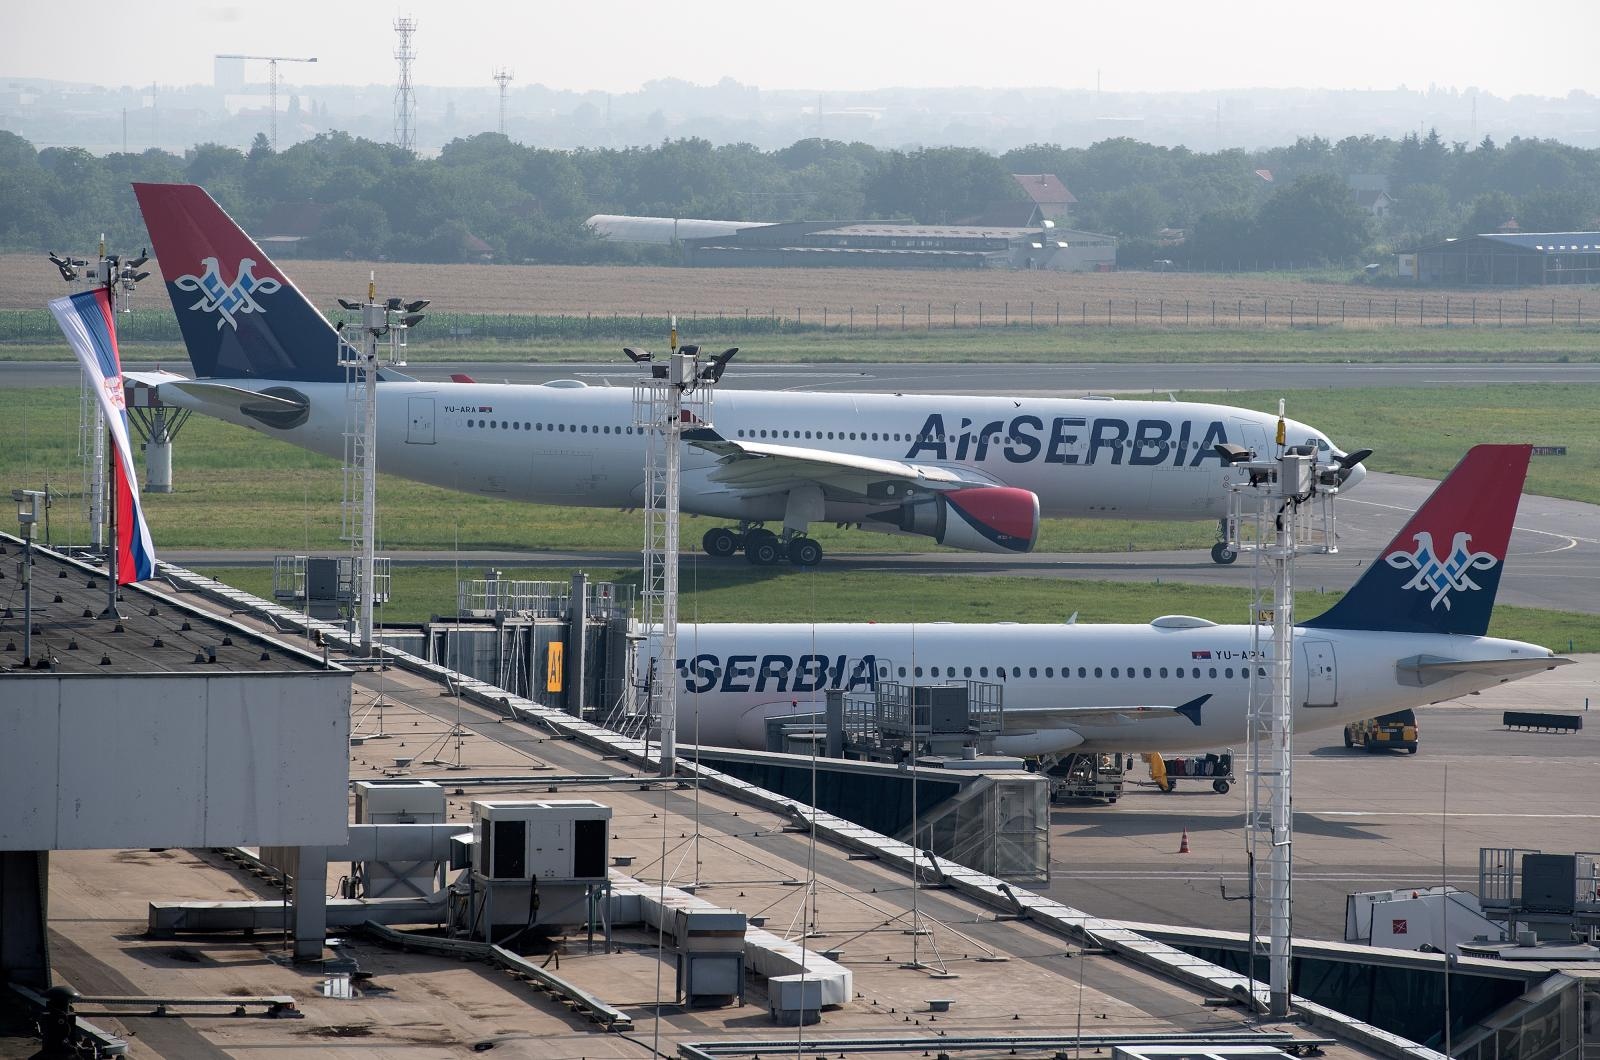 Airserbia com купить билет. A330 Air Serbia. Авиапарк авиакомпании Эйр Сербия. Air Serbia фото. Е195 AIRSERBIA.